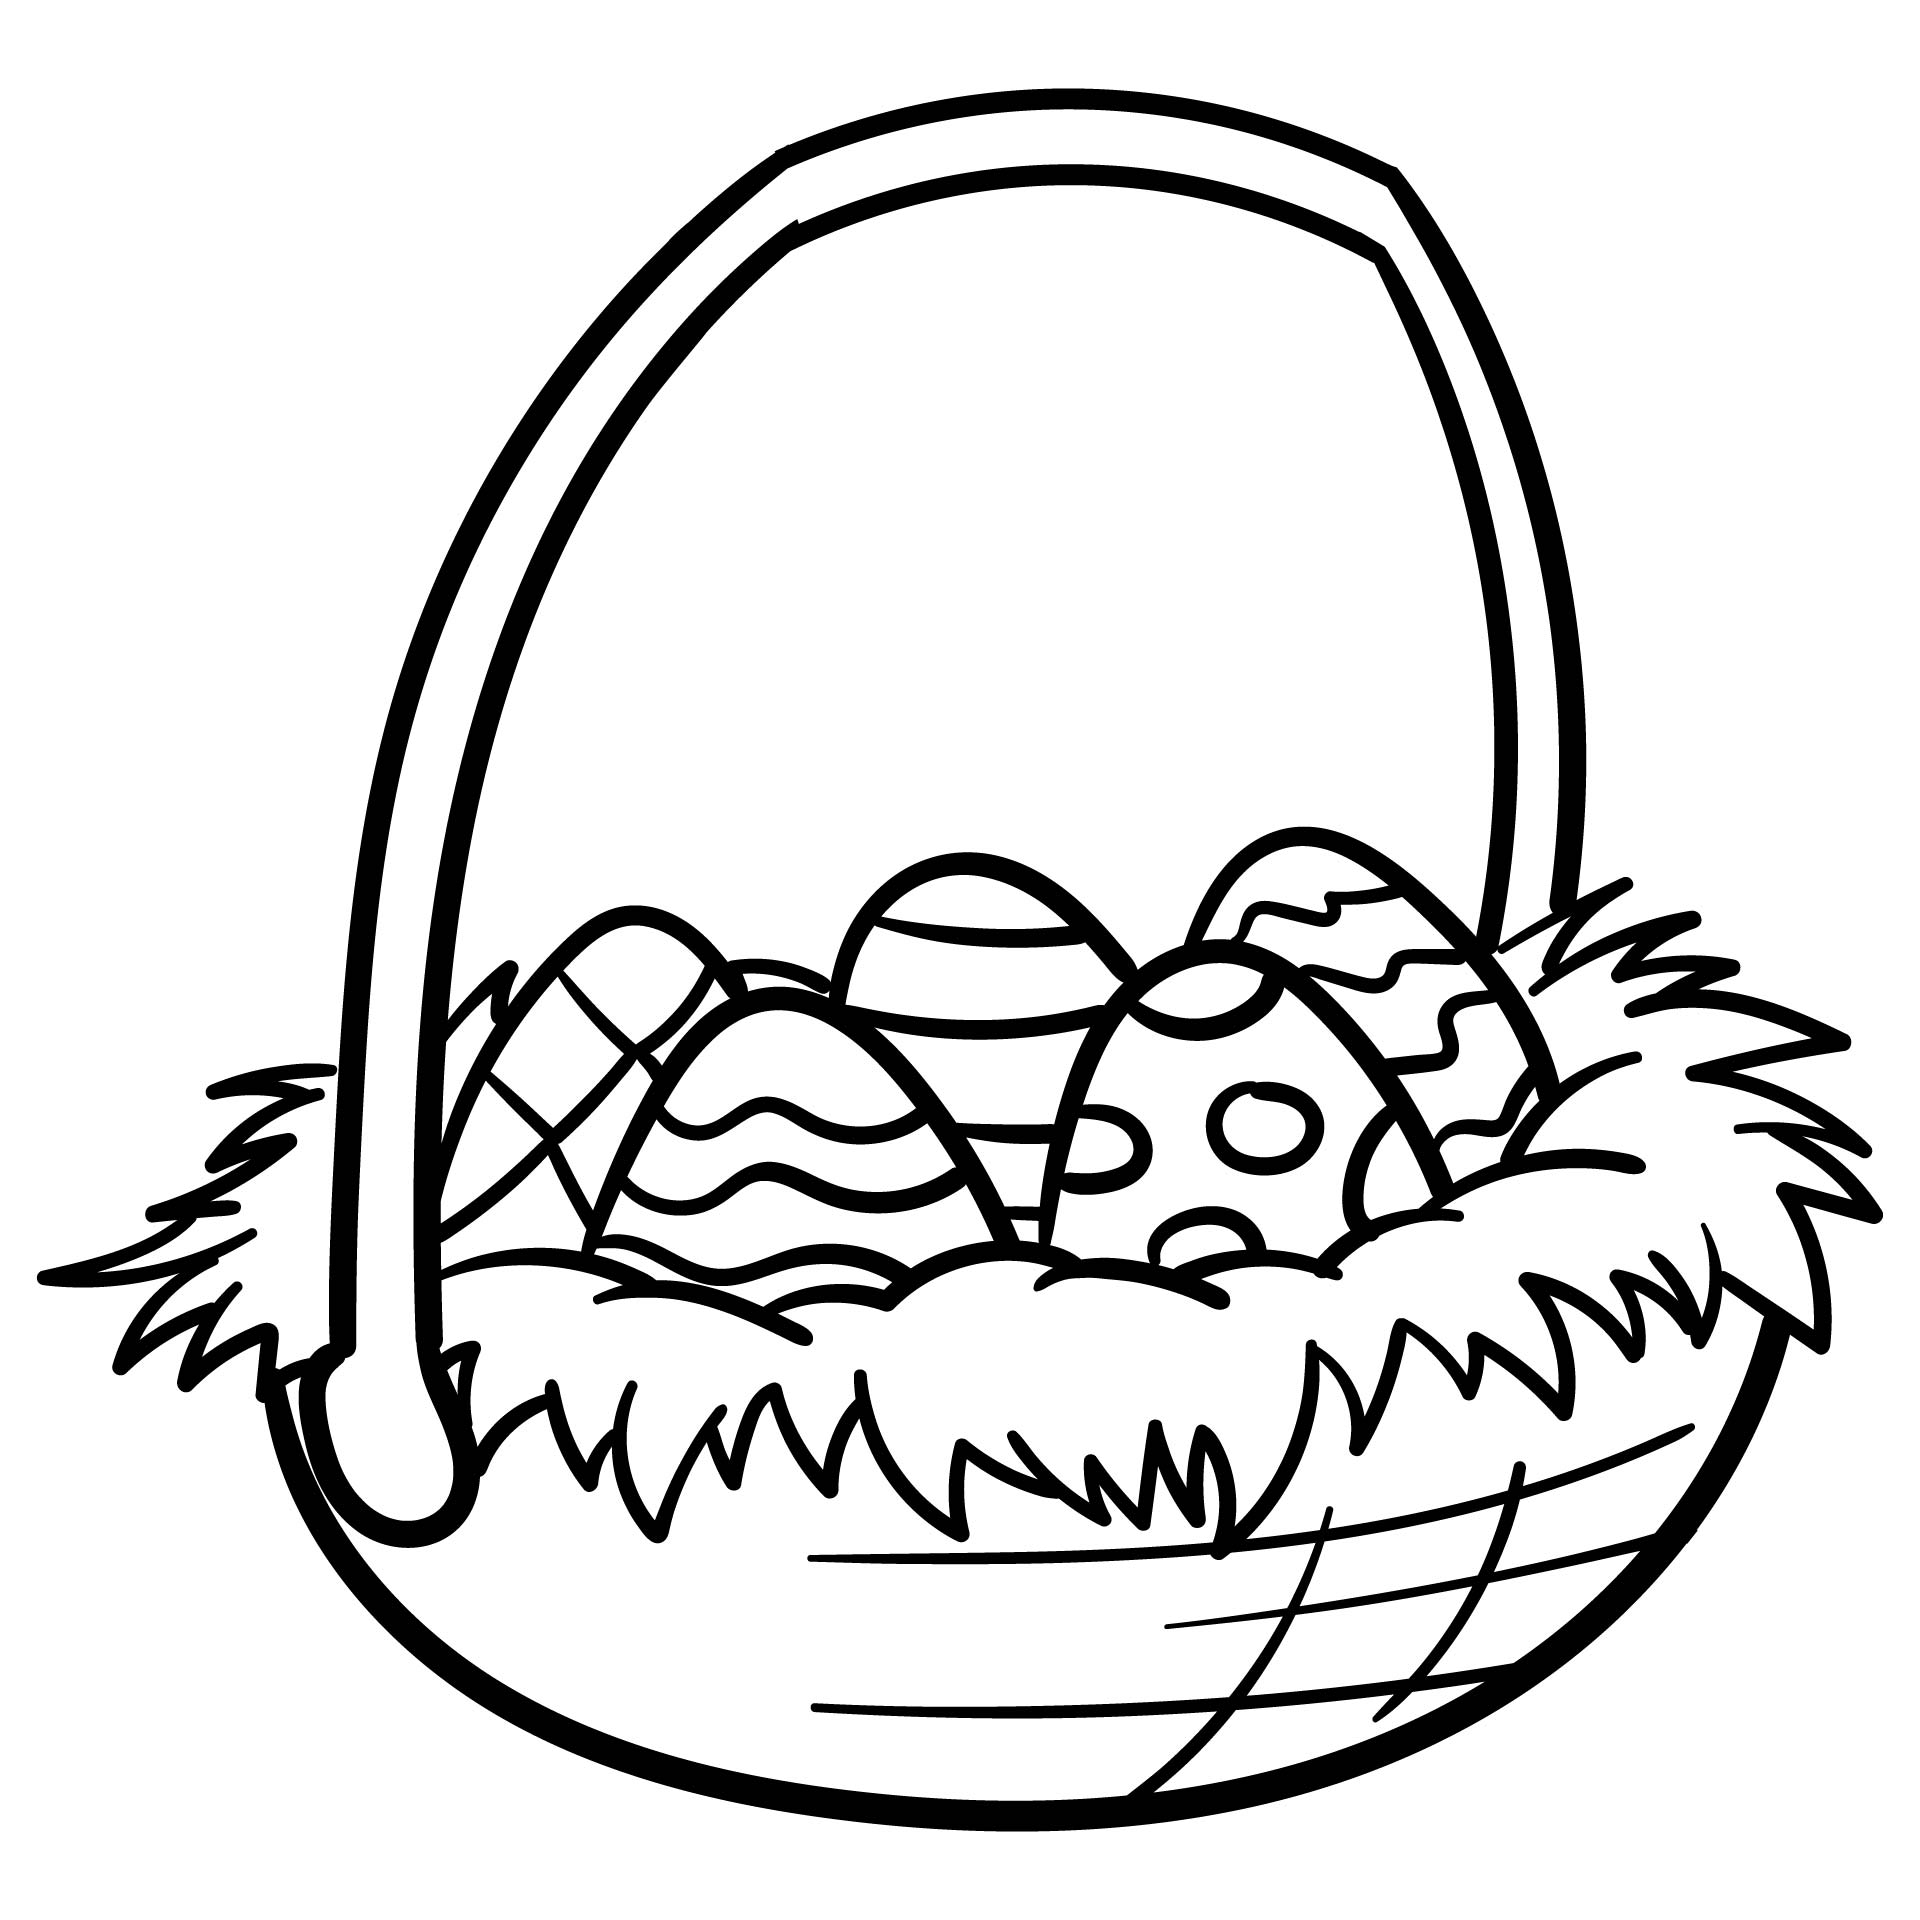 Printable Easter Basket